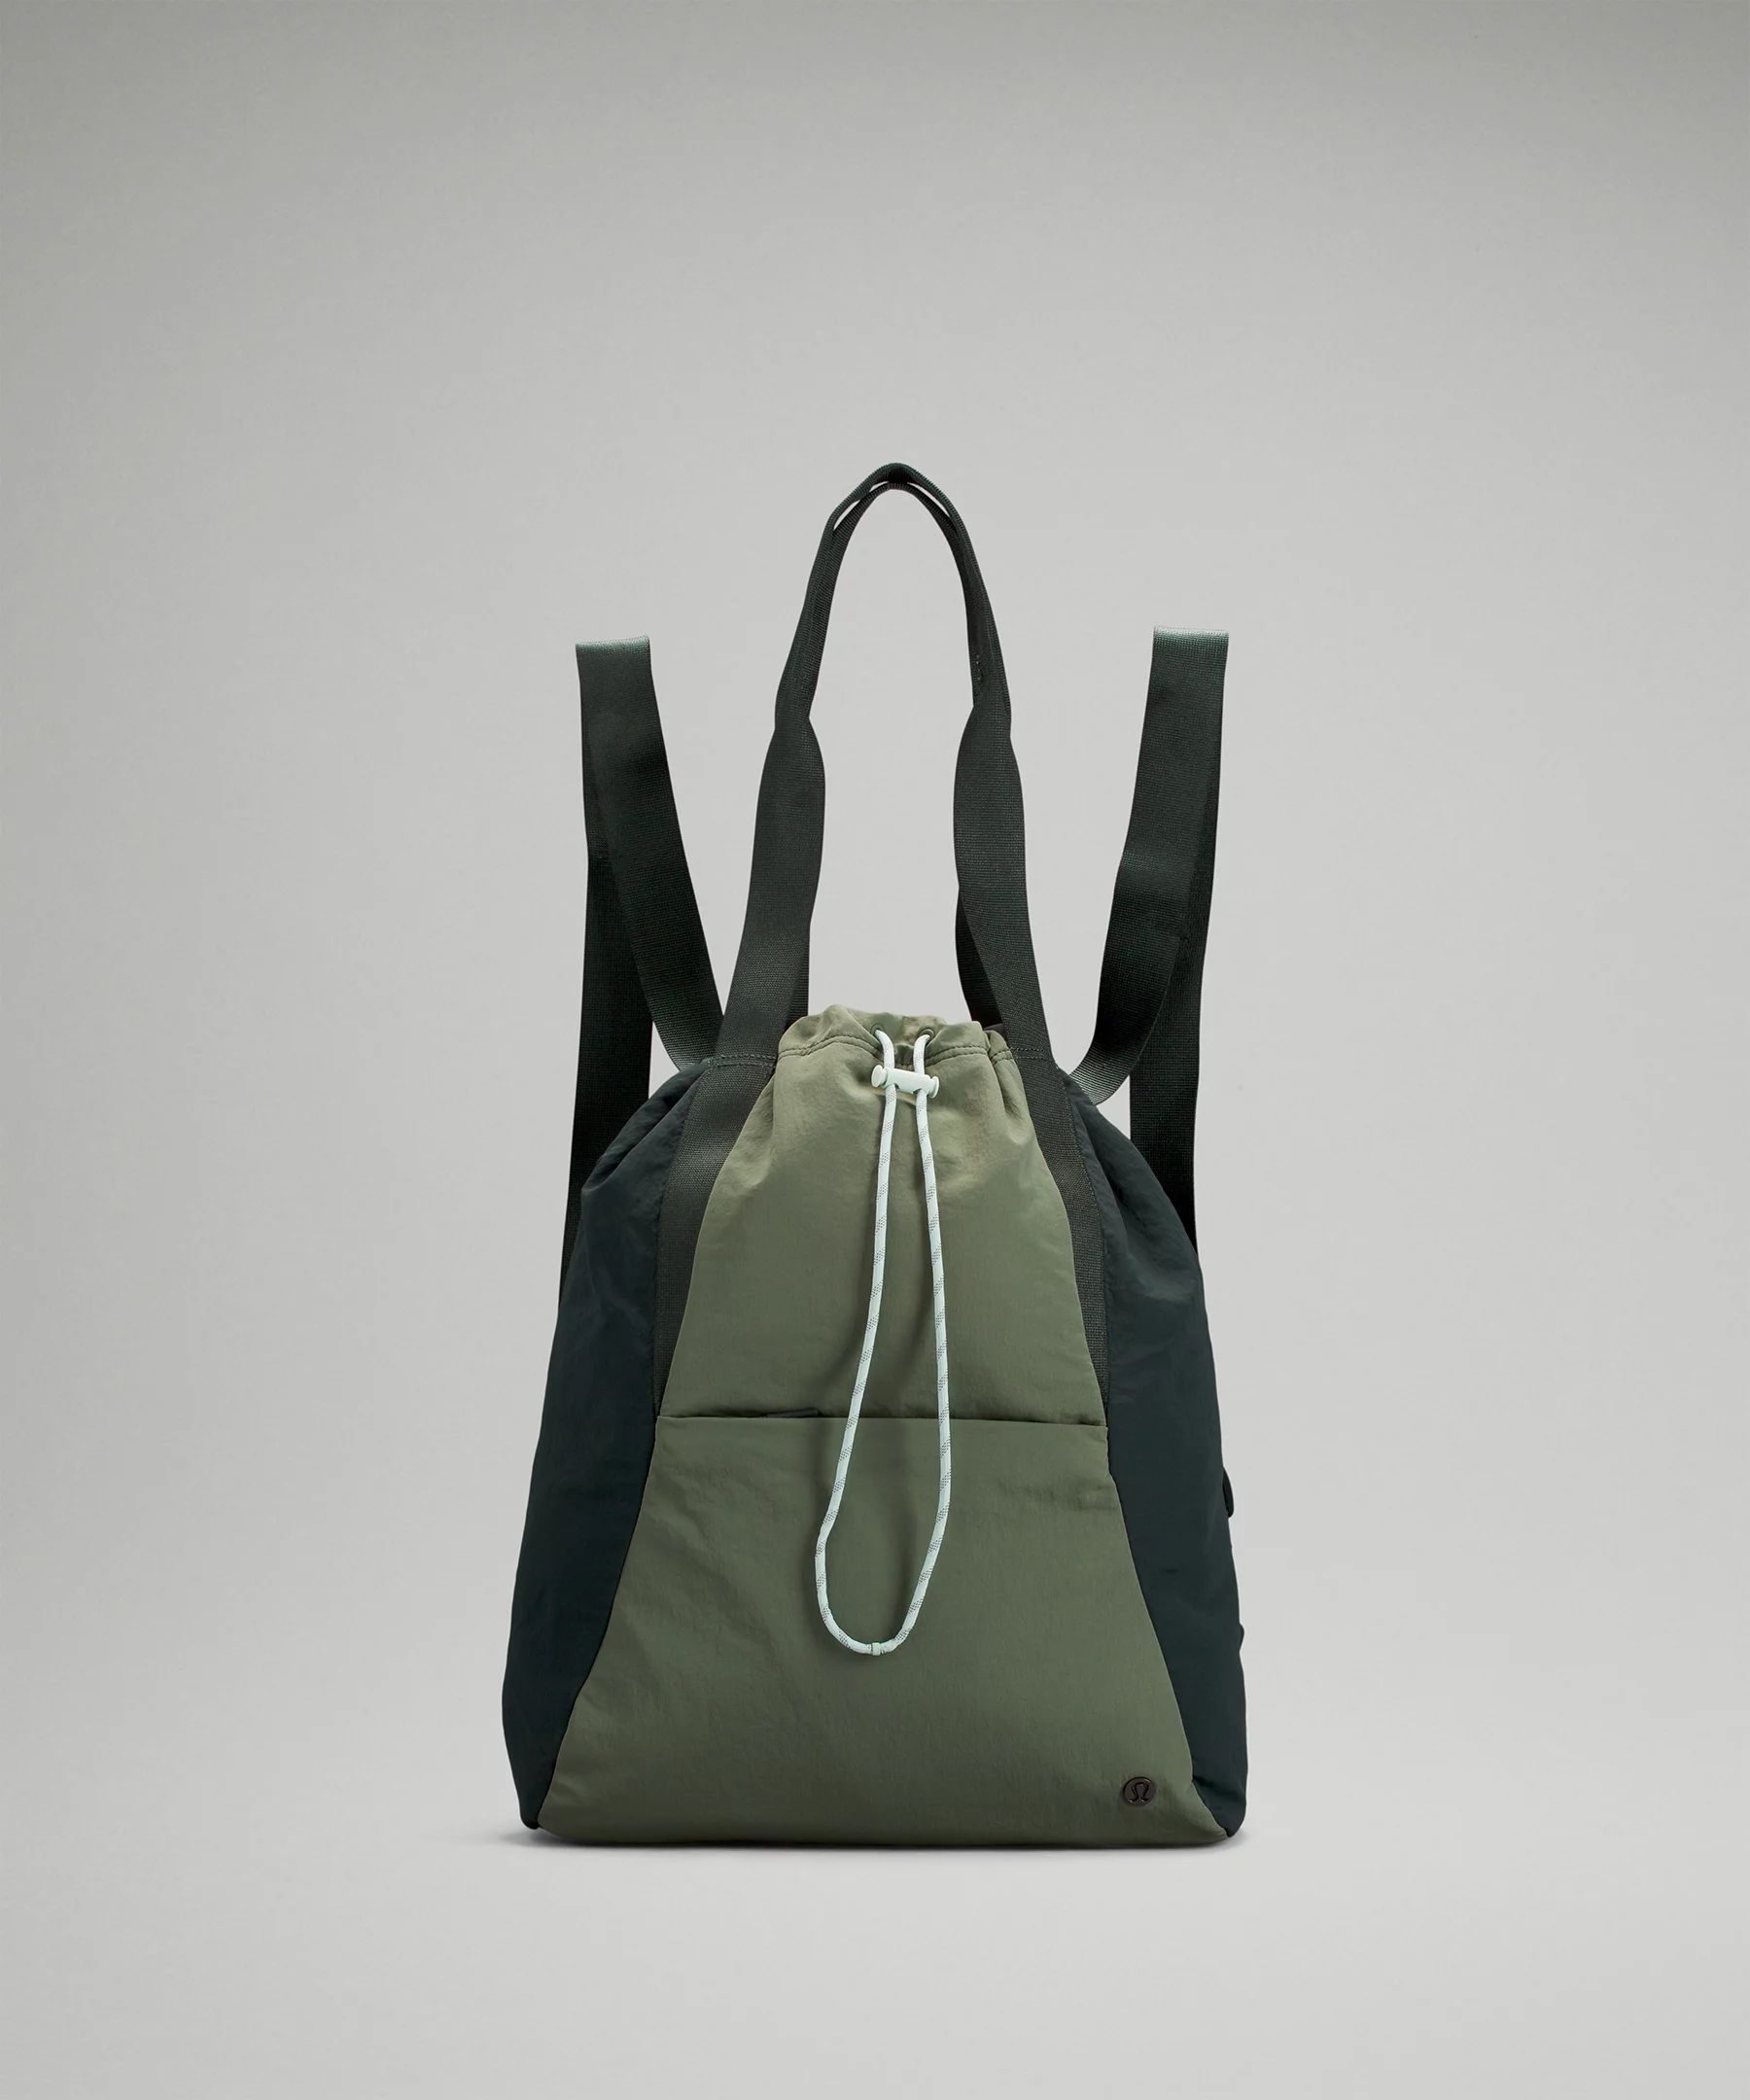 Dual Function Backpack to Tote Bag 18L | Lululemon (US)